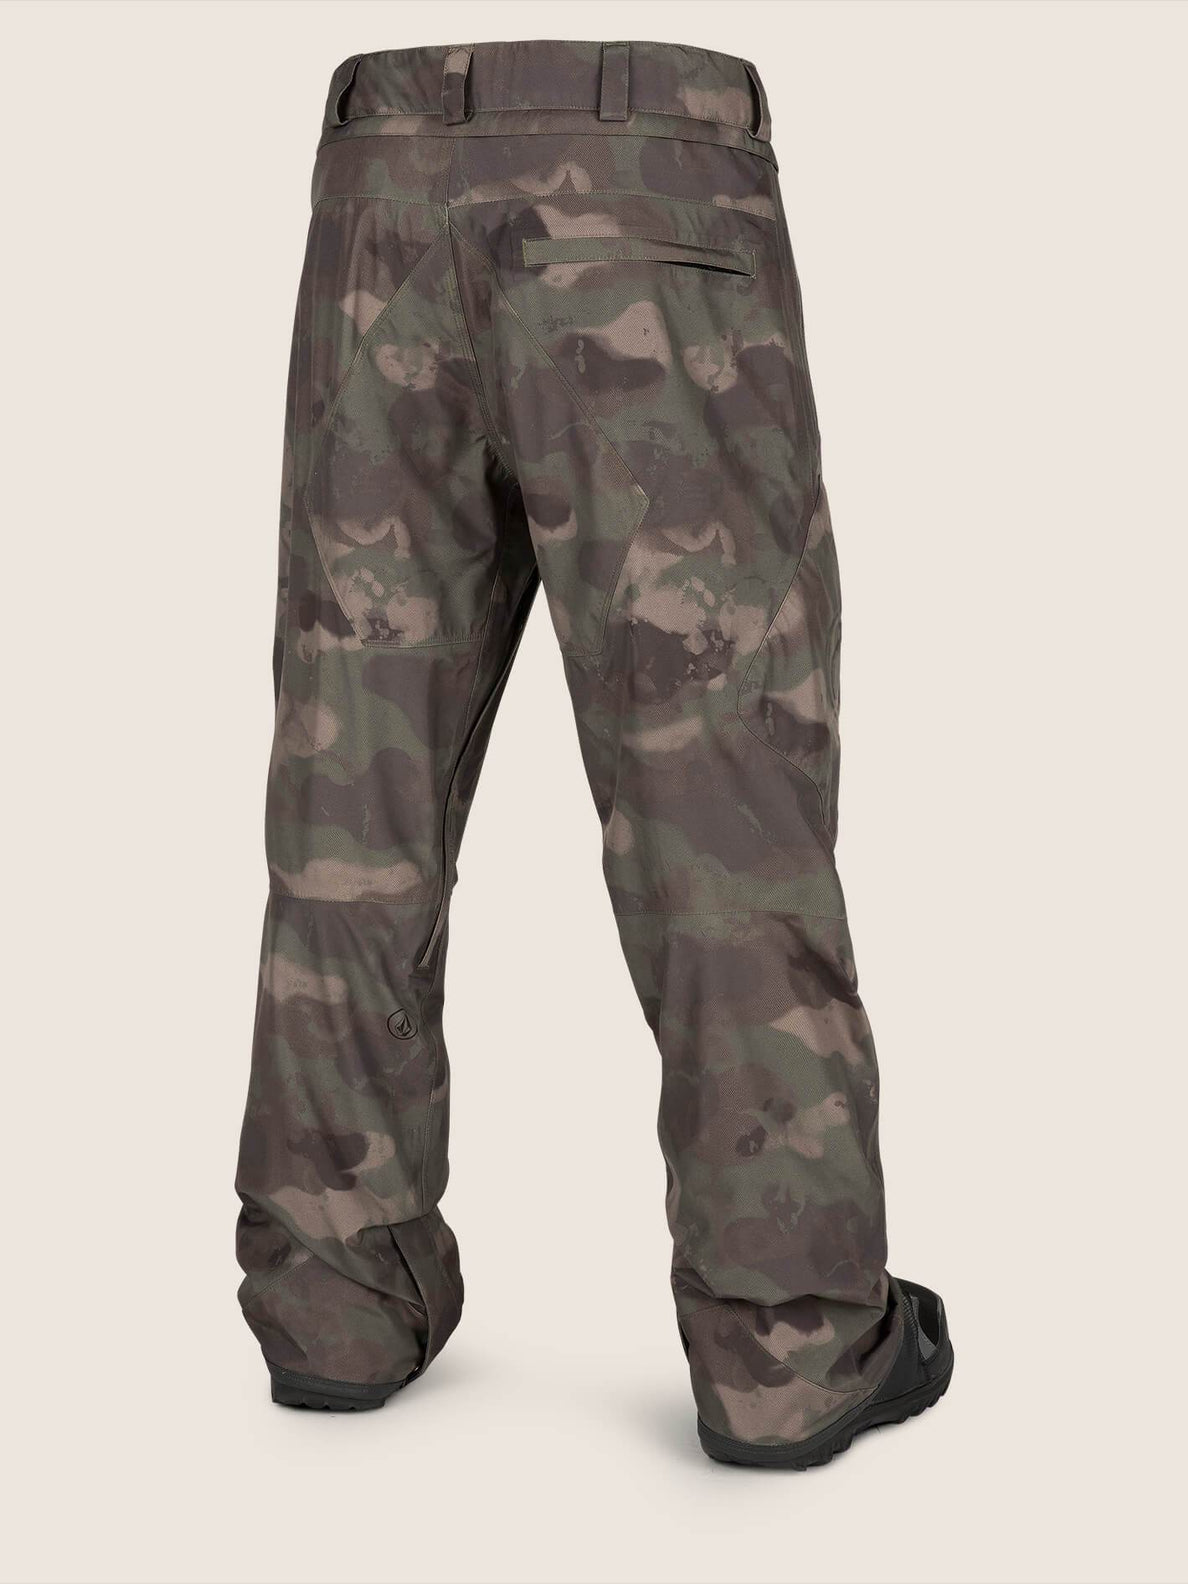 L GORE-TEX Pants - Camouflage